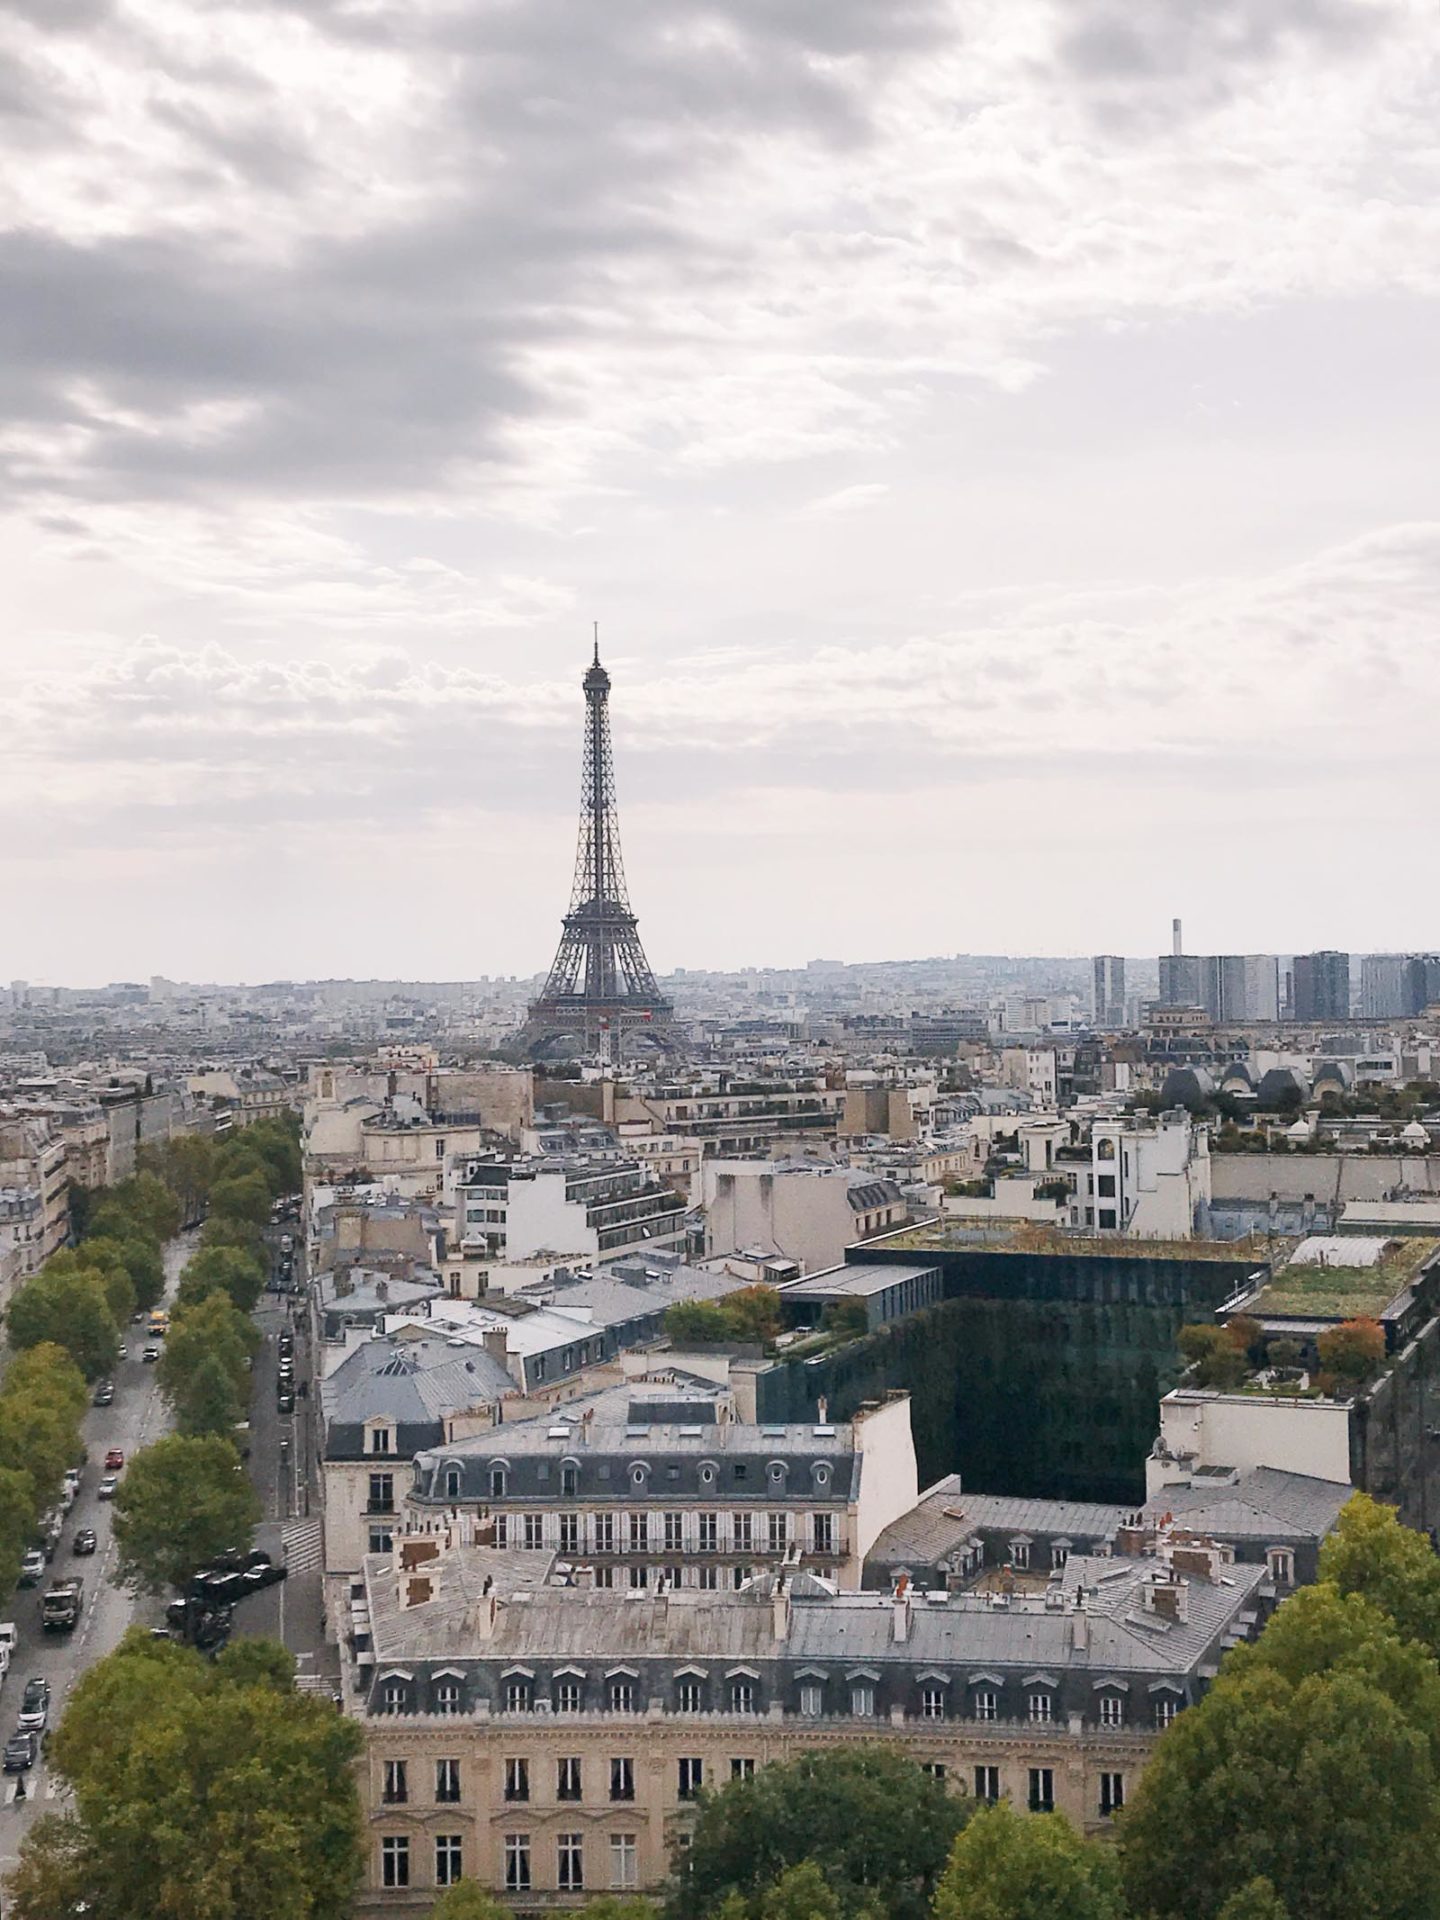 Eiffel Tower Paris, view from the Arc de Triomphe